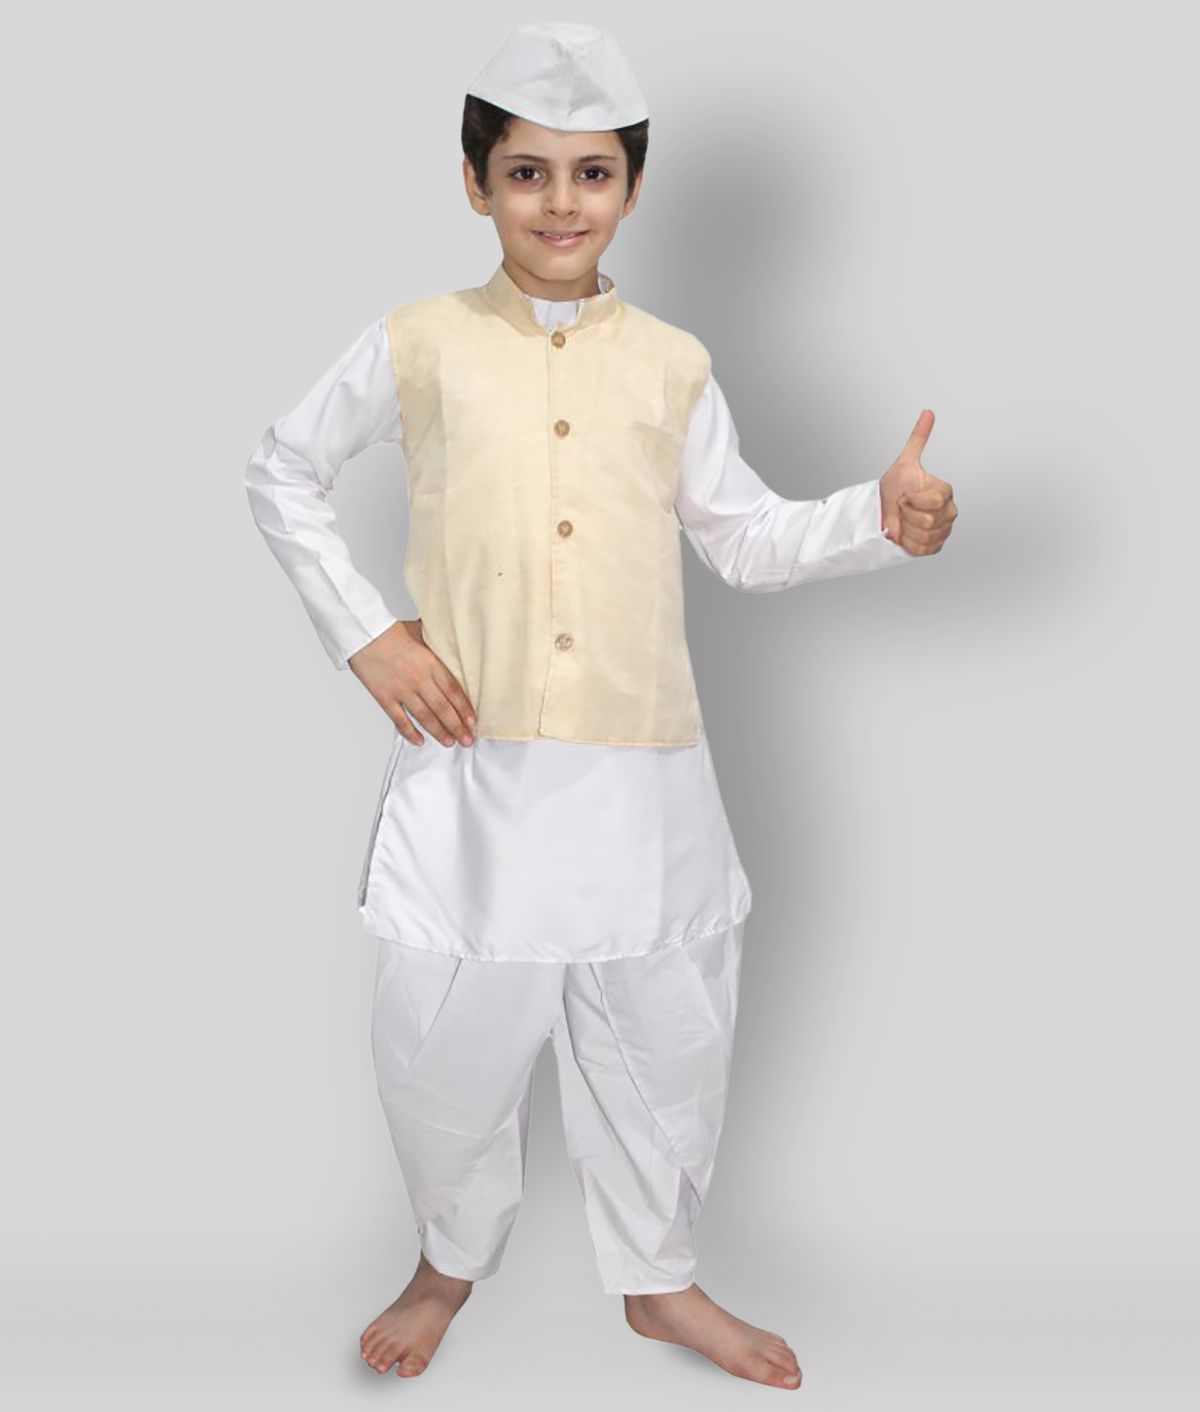     			Kaku Fancy Dresses National Hero/ Freedom Figter Lal Bahadur Shastri Costume -White, 5-6 Years, For Boys Kids Costume Wear